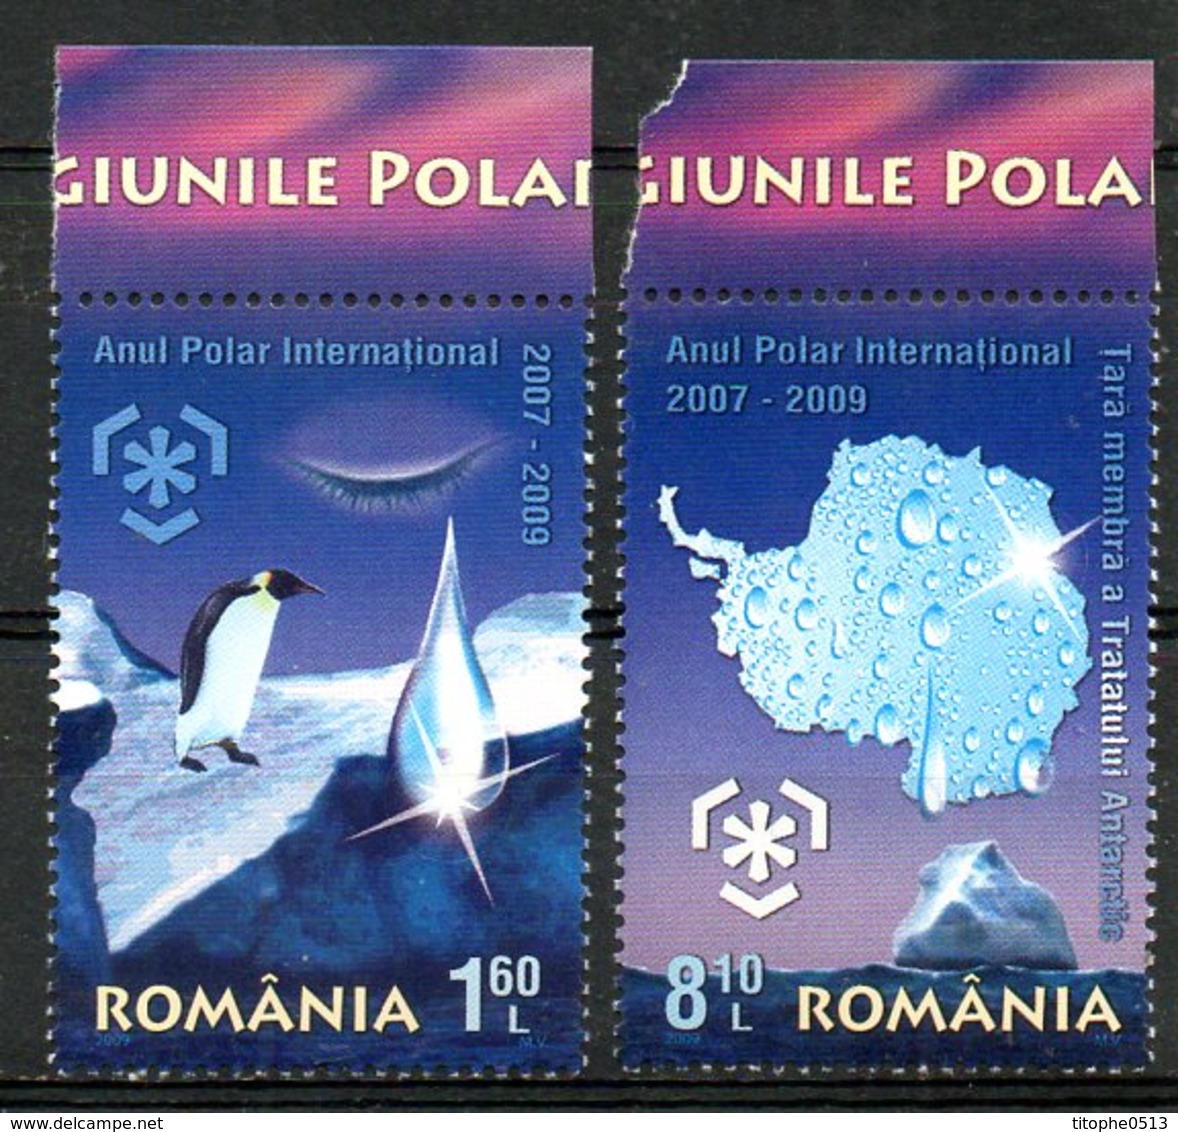 ROUMANIE. N°5399-5400 De 2009. Année Polaire Internationale. - International Polar Year